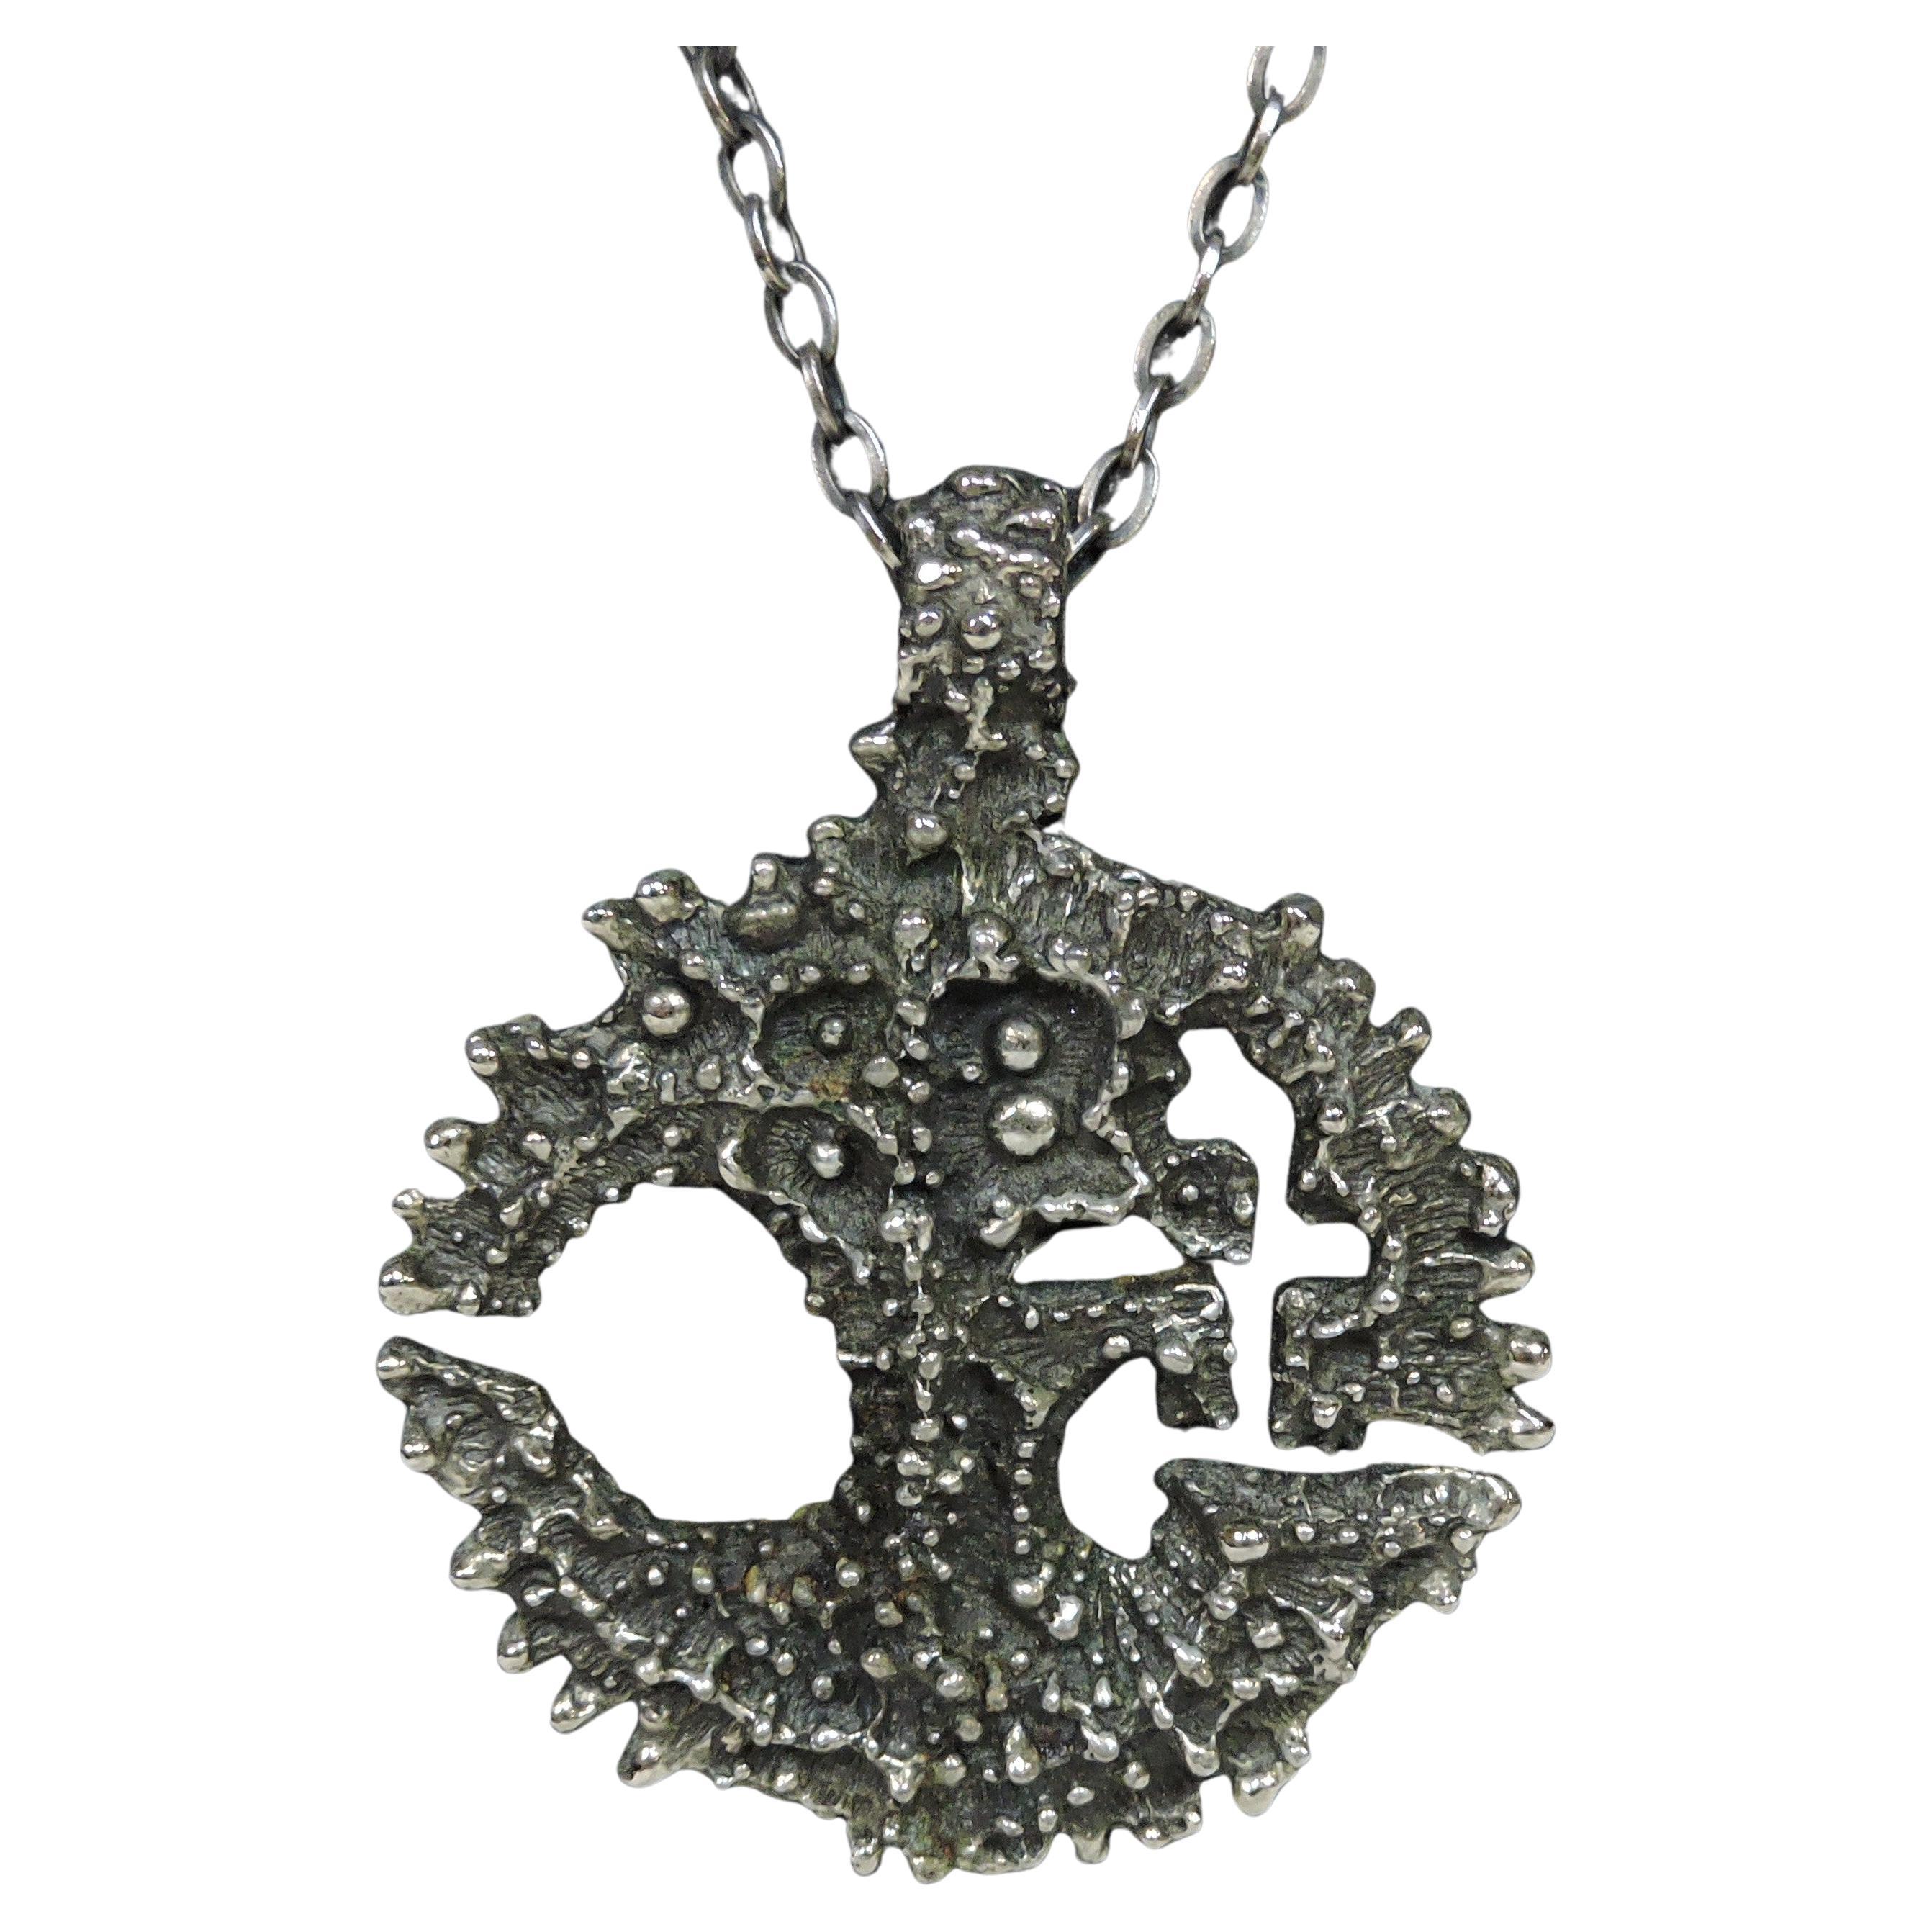 Robert Larin Brutalist Modernist Sculptural Pendant Necklace, Canada Art Jewelry